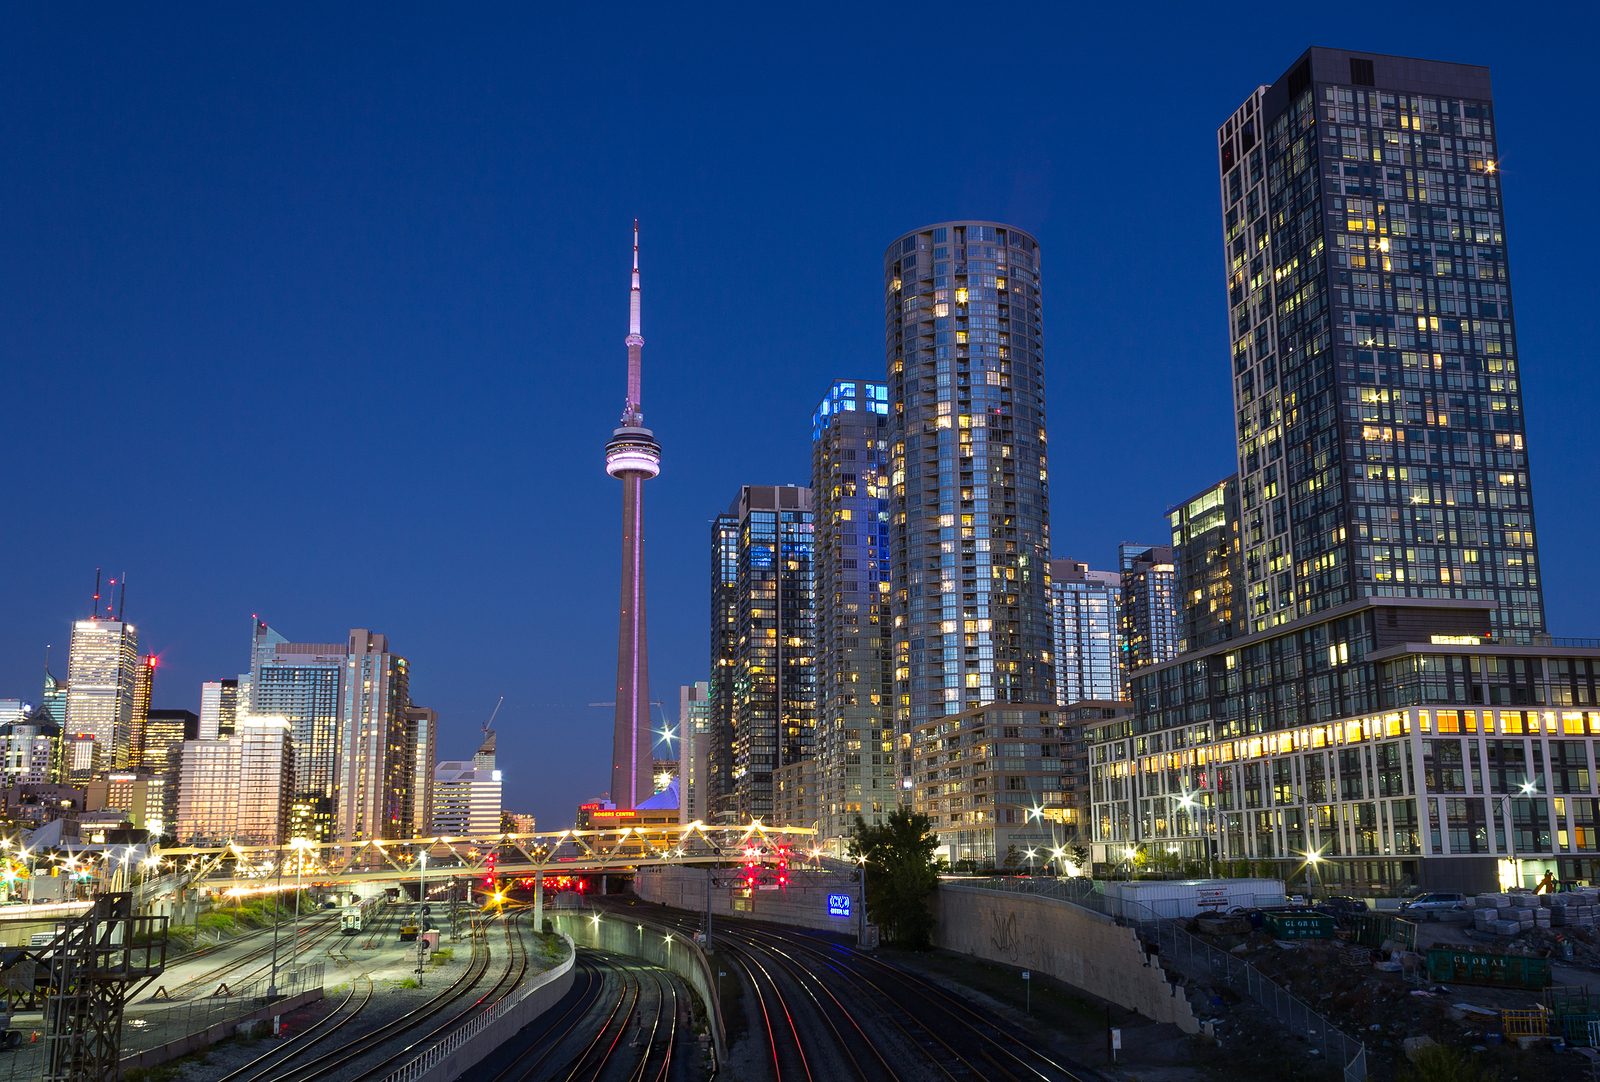 Toronto Condos And The Cn Tower